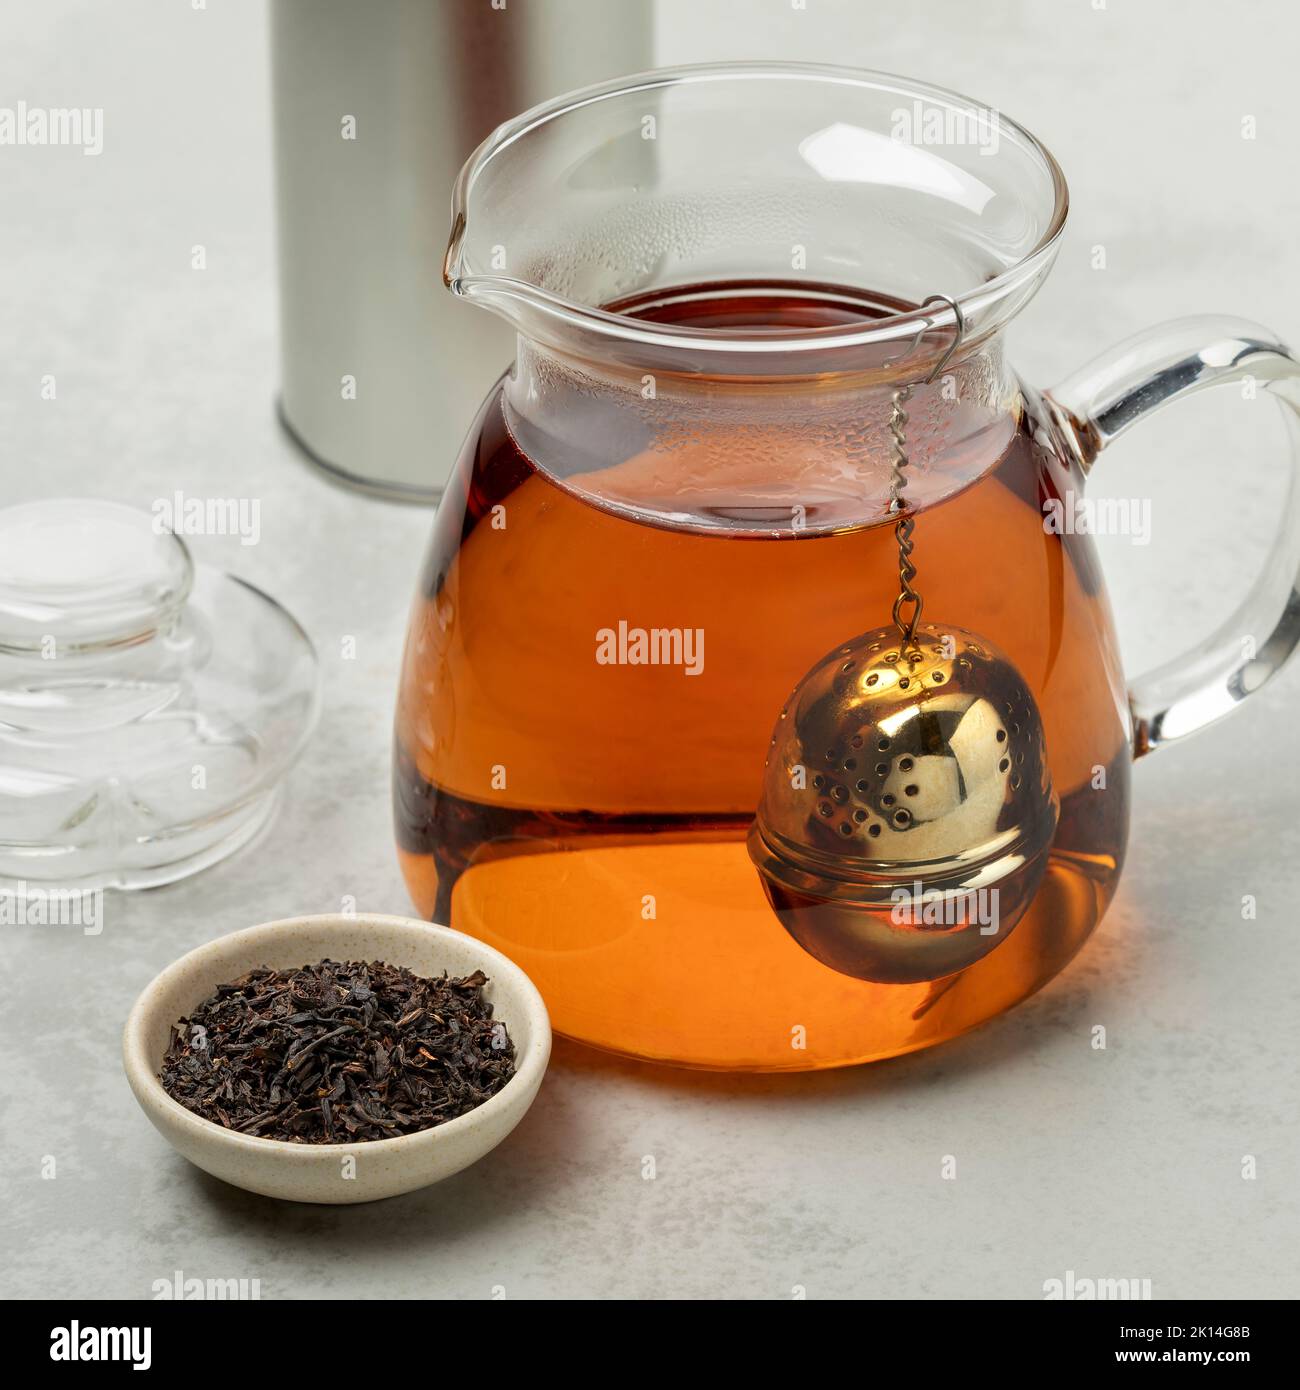 Tetera de cristal con un infusor de té de metal y un tazón con té Ostfriesen alemán en frente Foto de stock